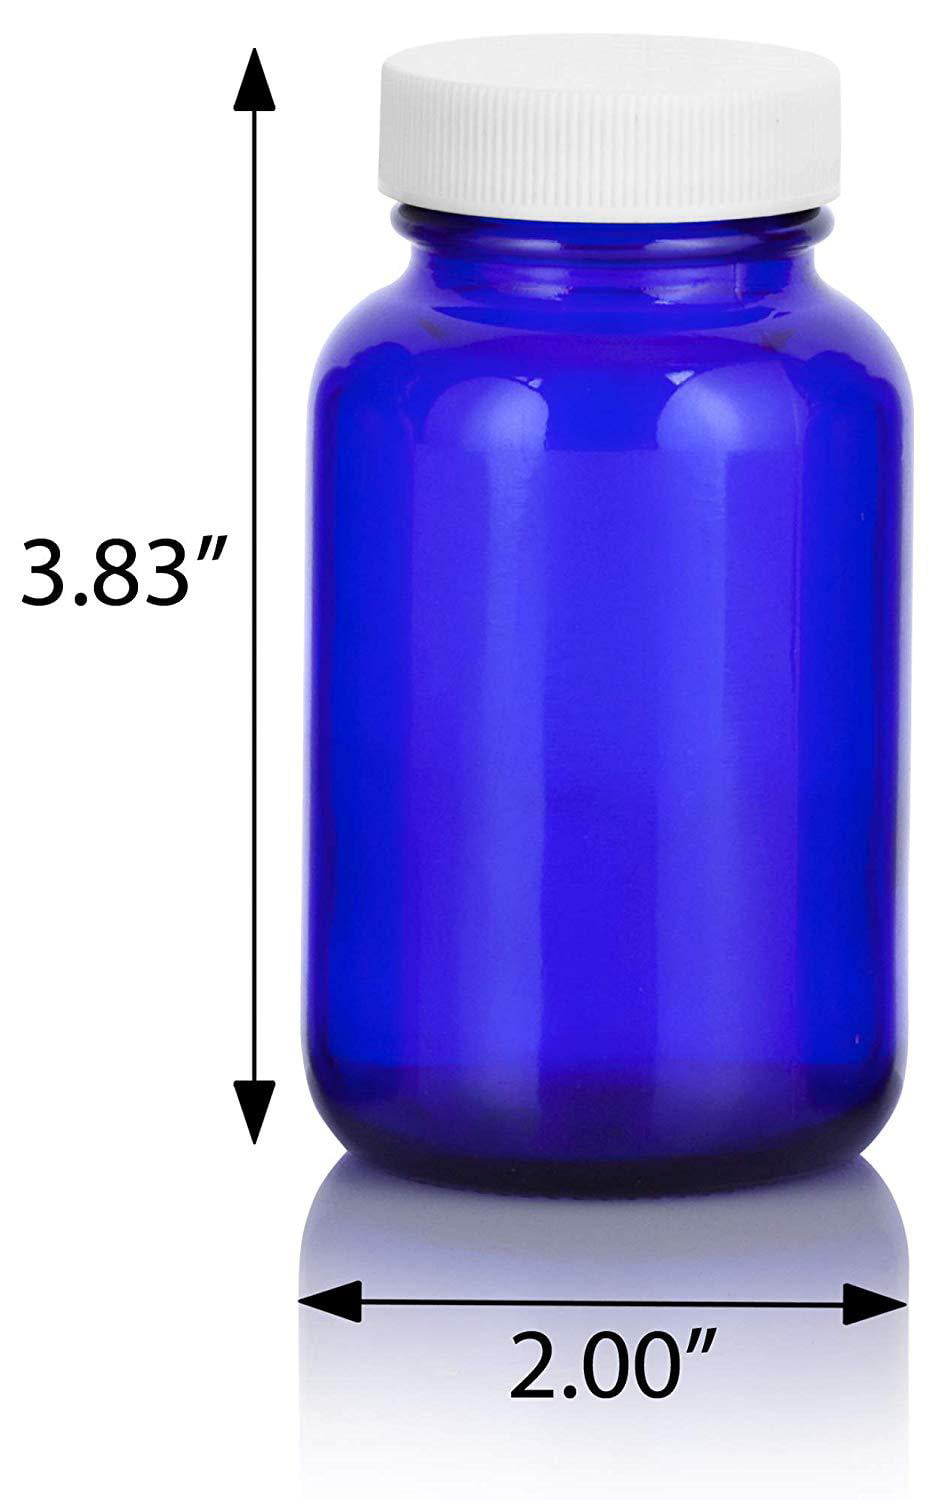  Glass Bottles With Lids 4 Clear 24 Oz Empty Bottles Refillable Jars Oils  Clean